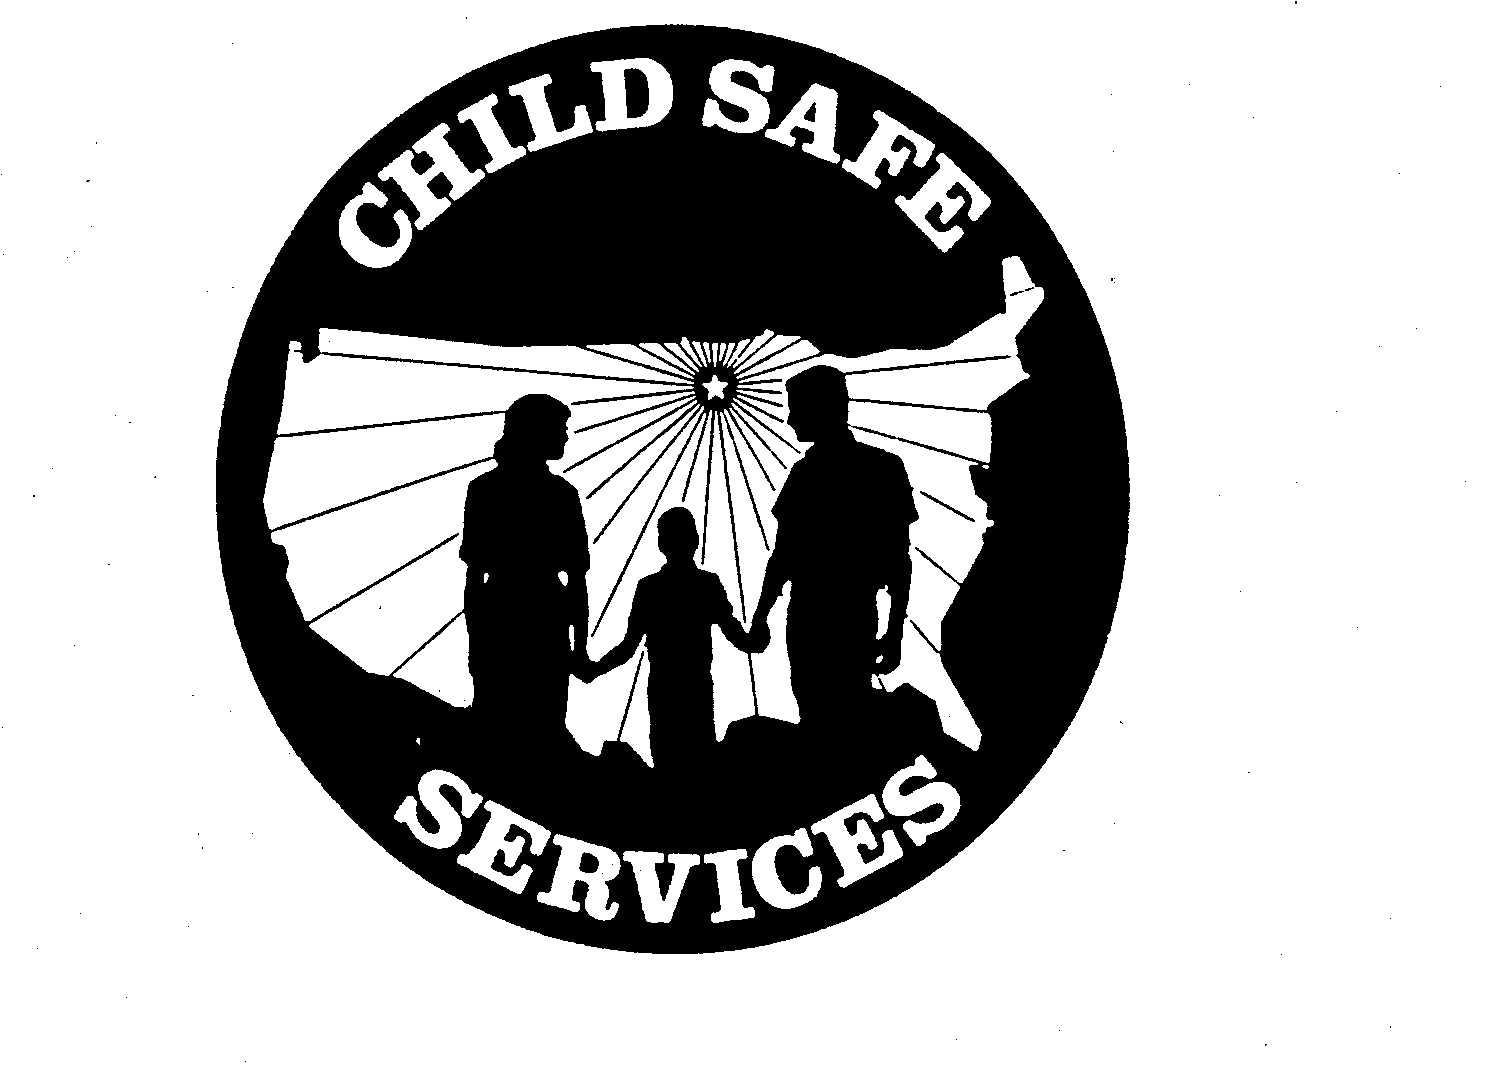  CHILD SAFE SERVICES